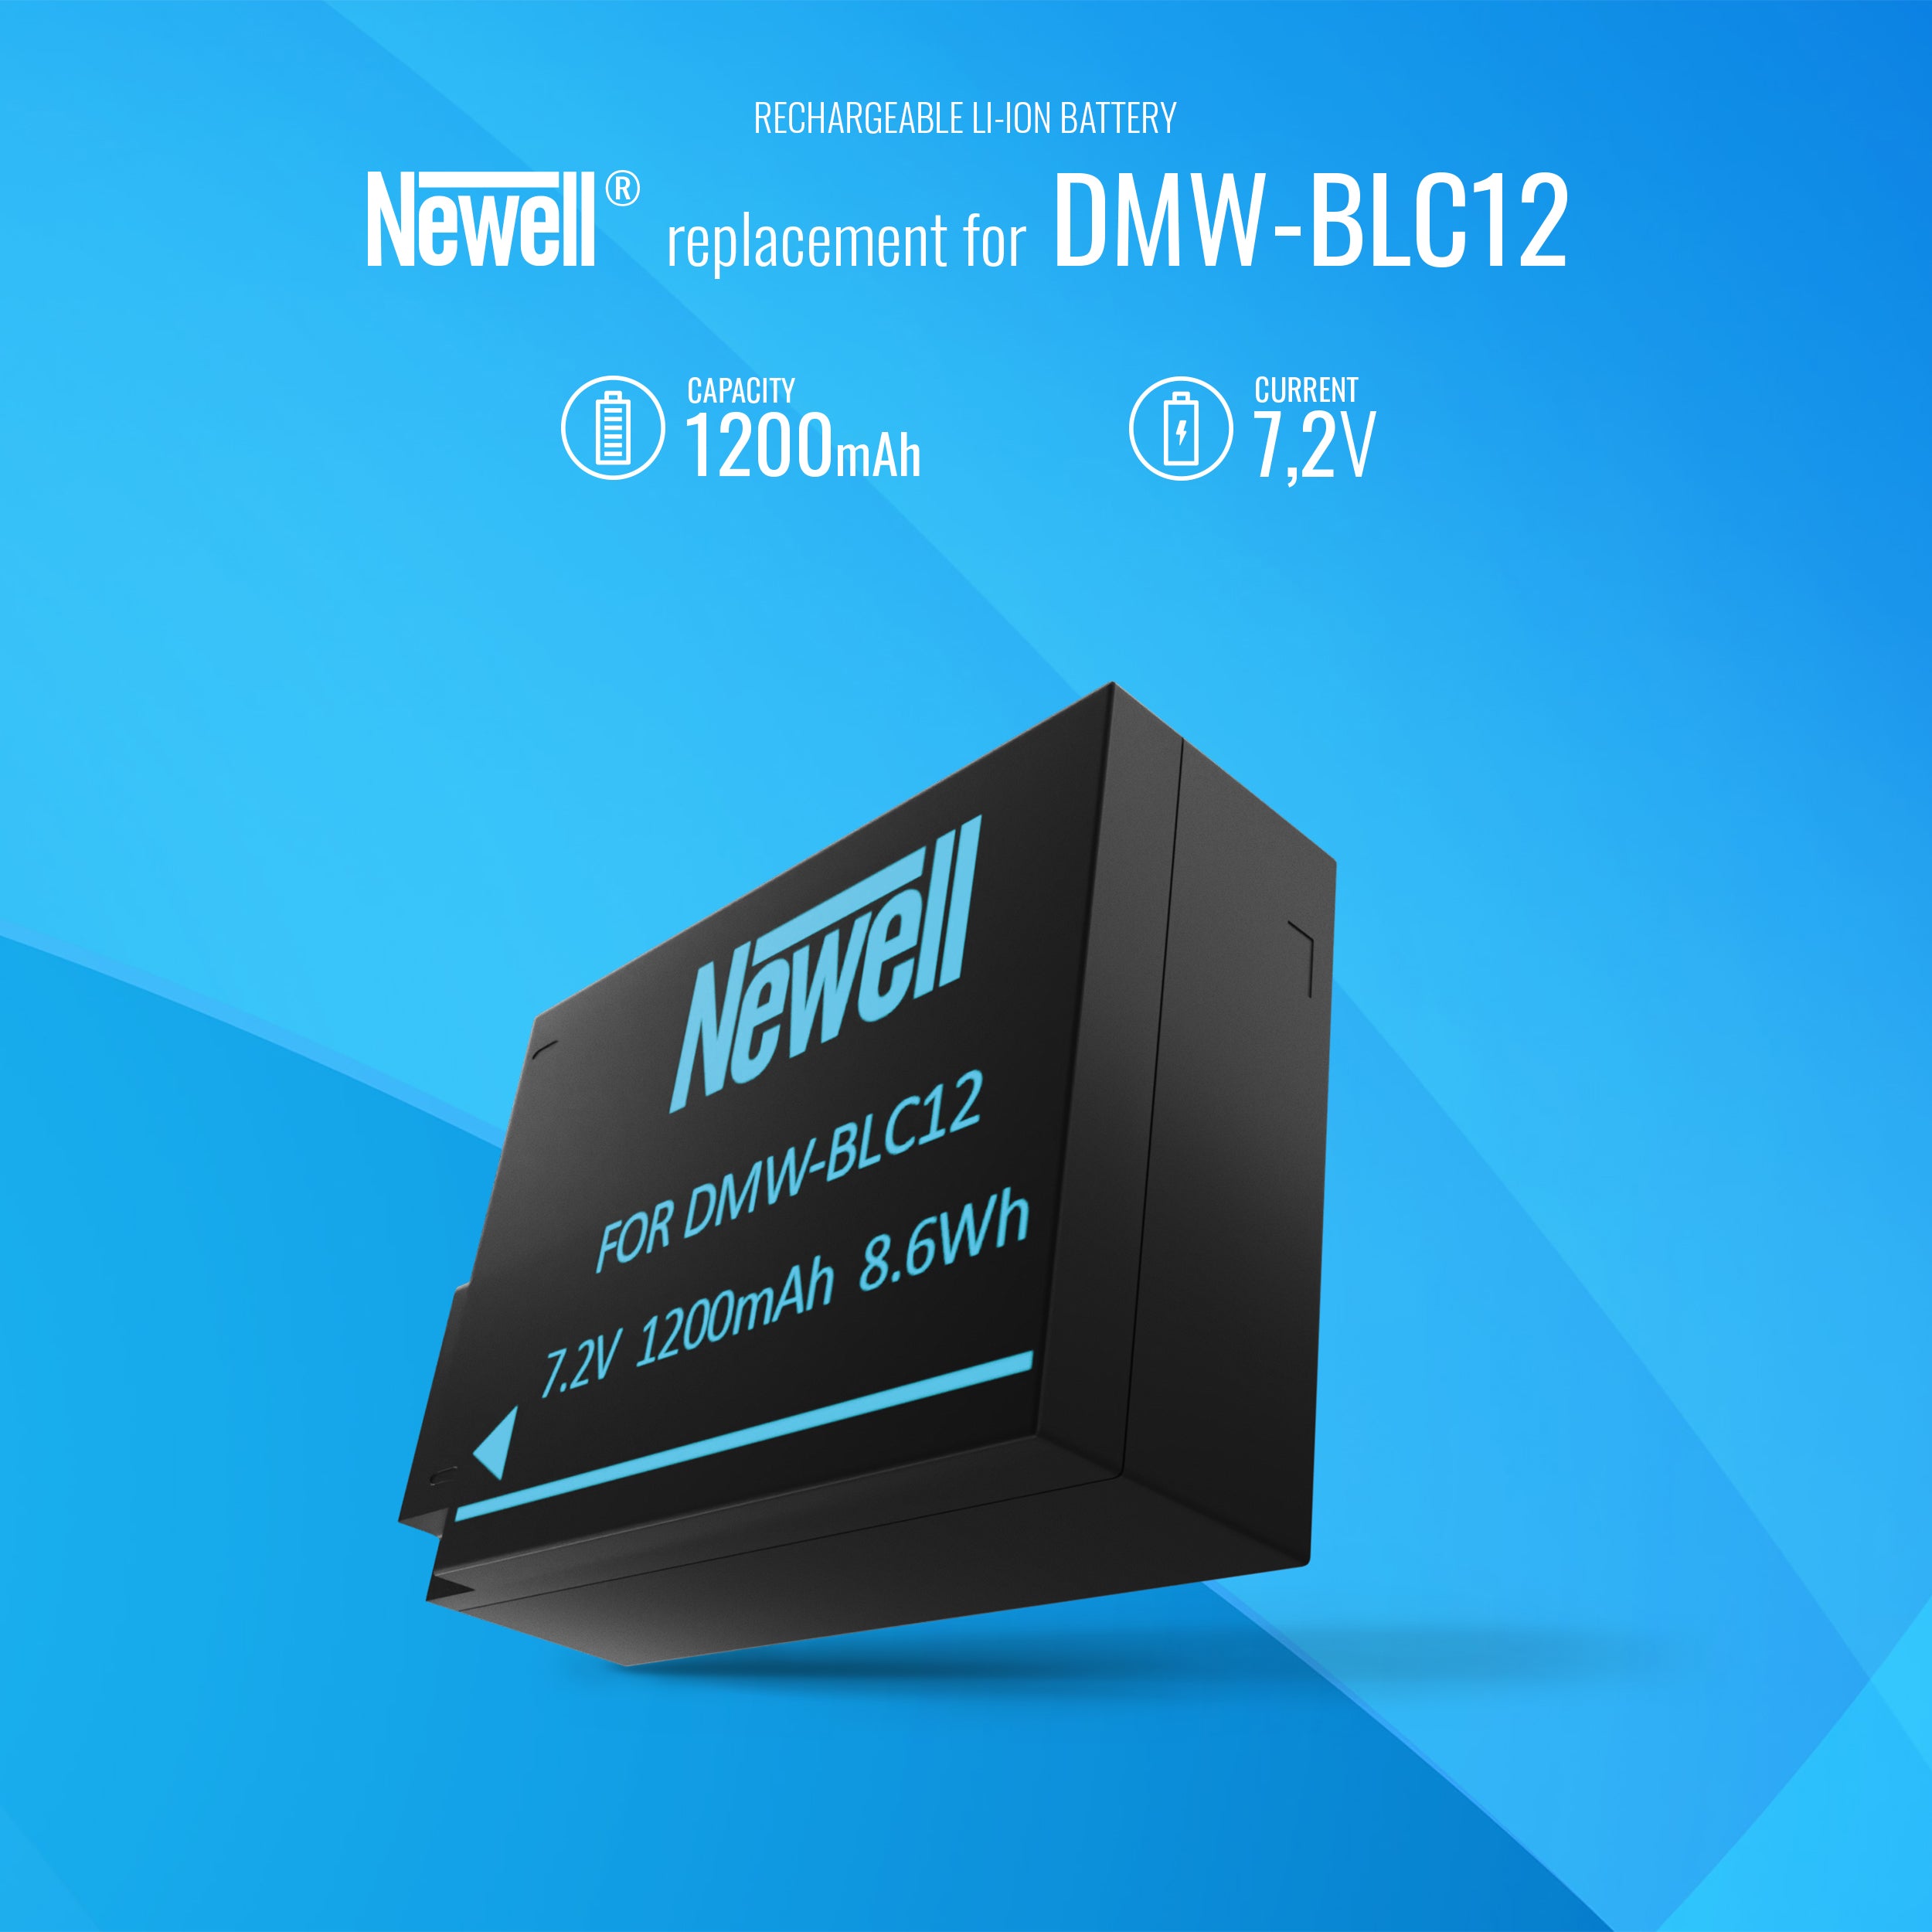 Newell rechargeable battery DMW-BLC12